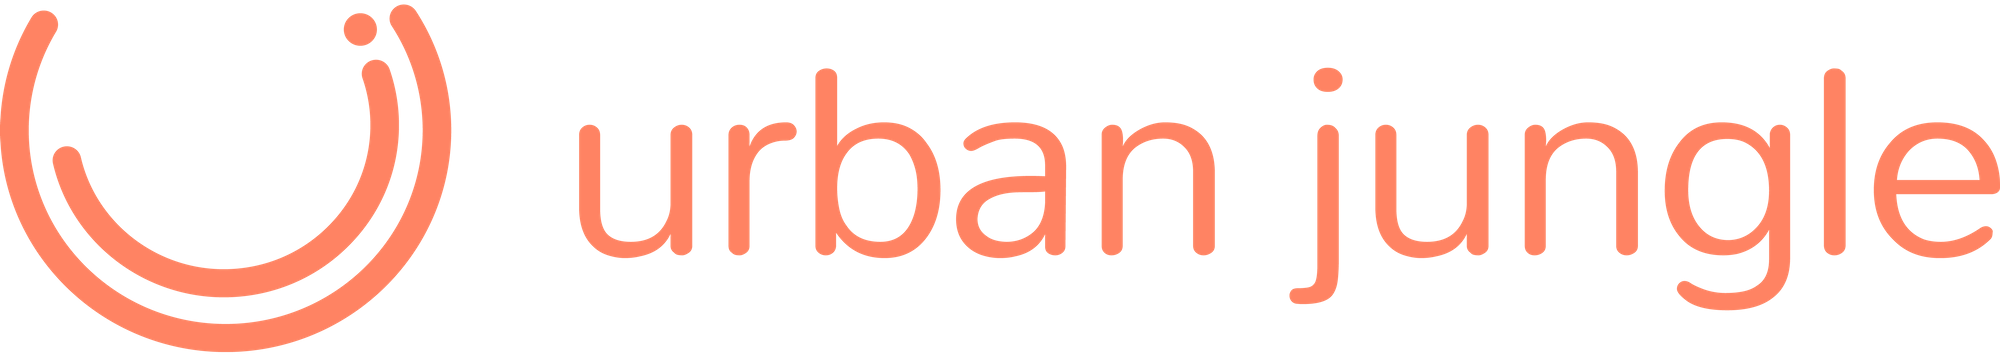 UJ-logo_orange-3